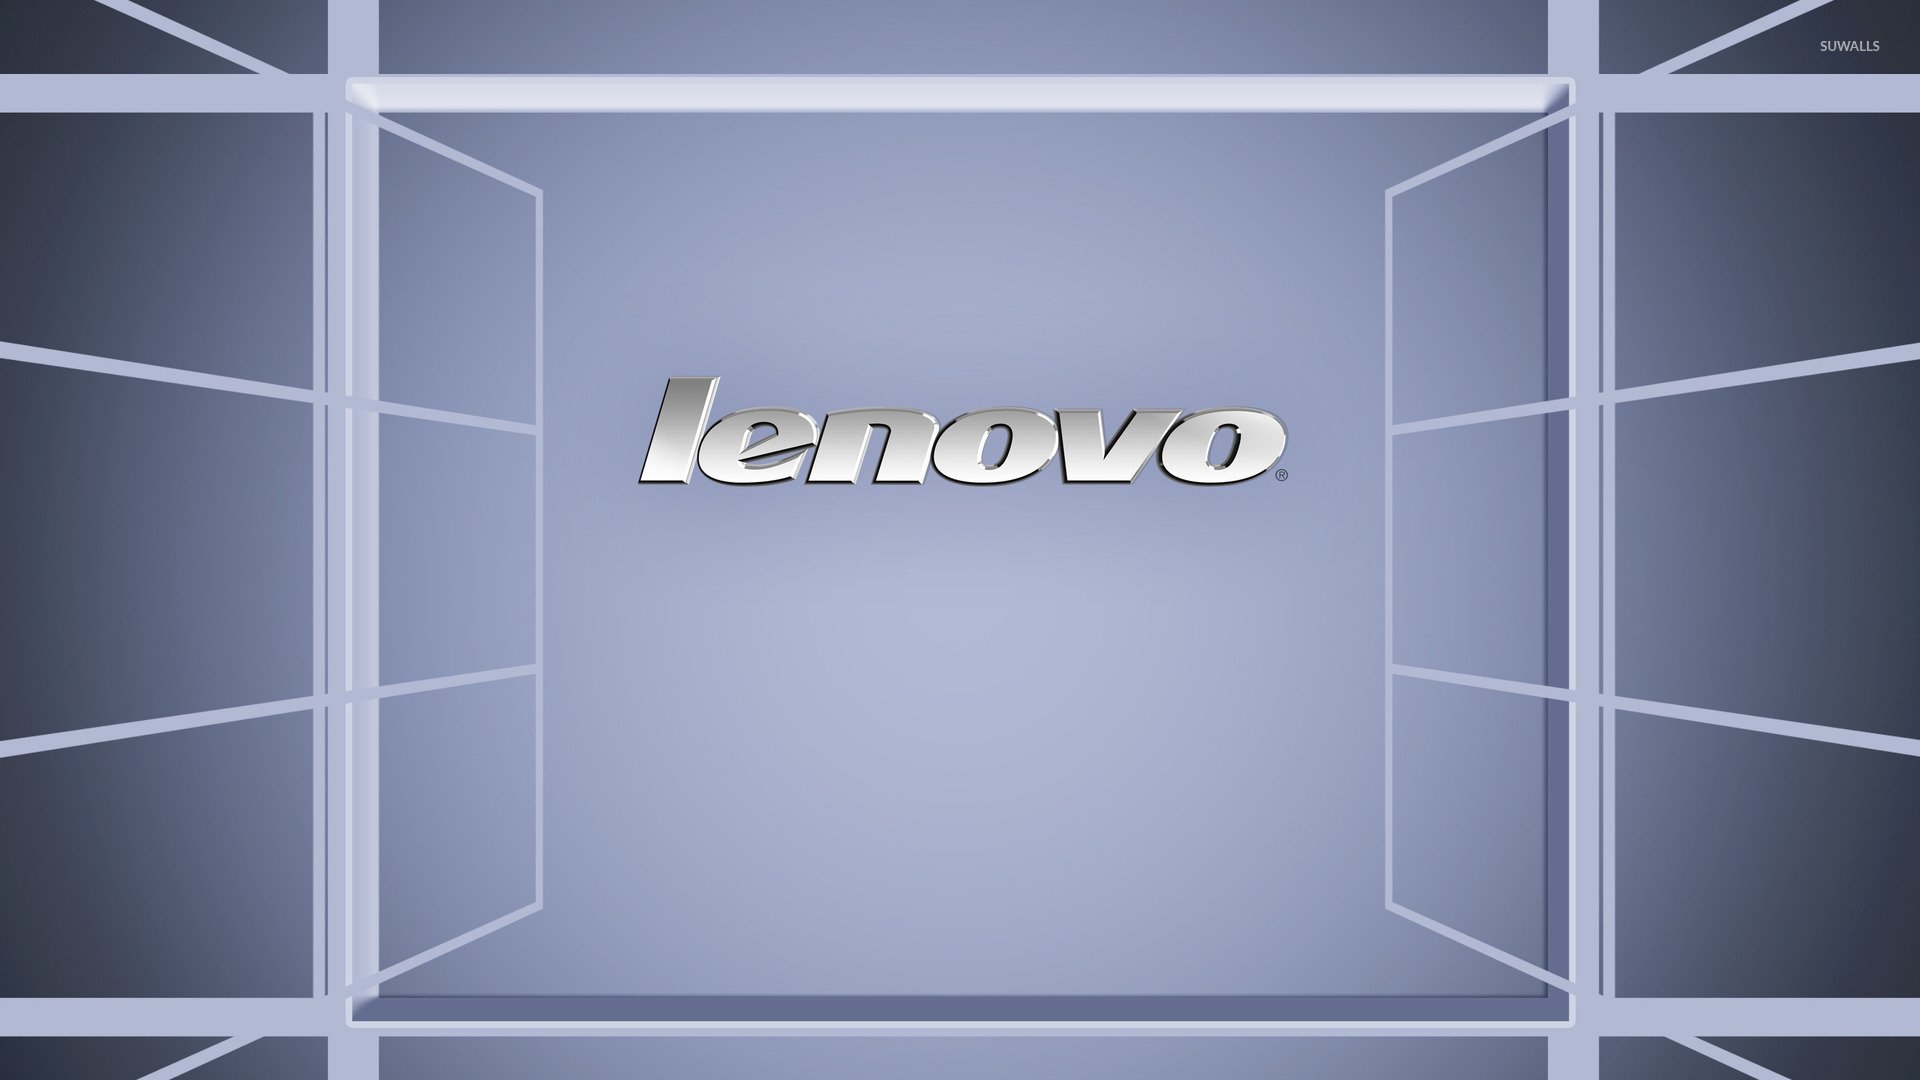 Lenovo wallpaper   Computer wallpapers   22007